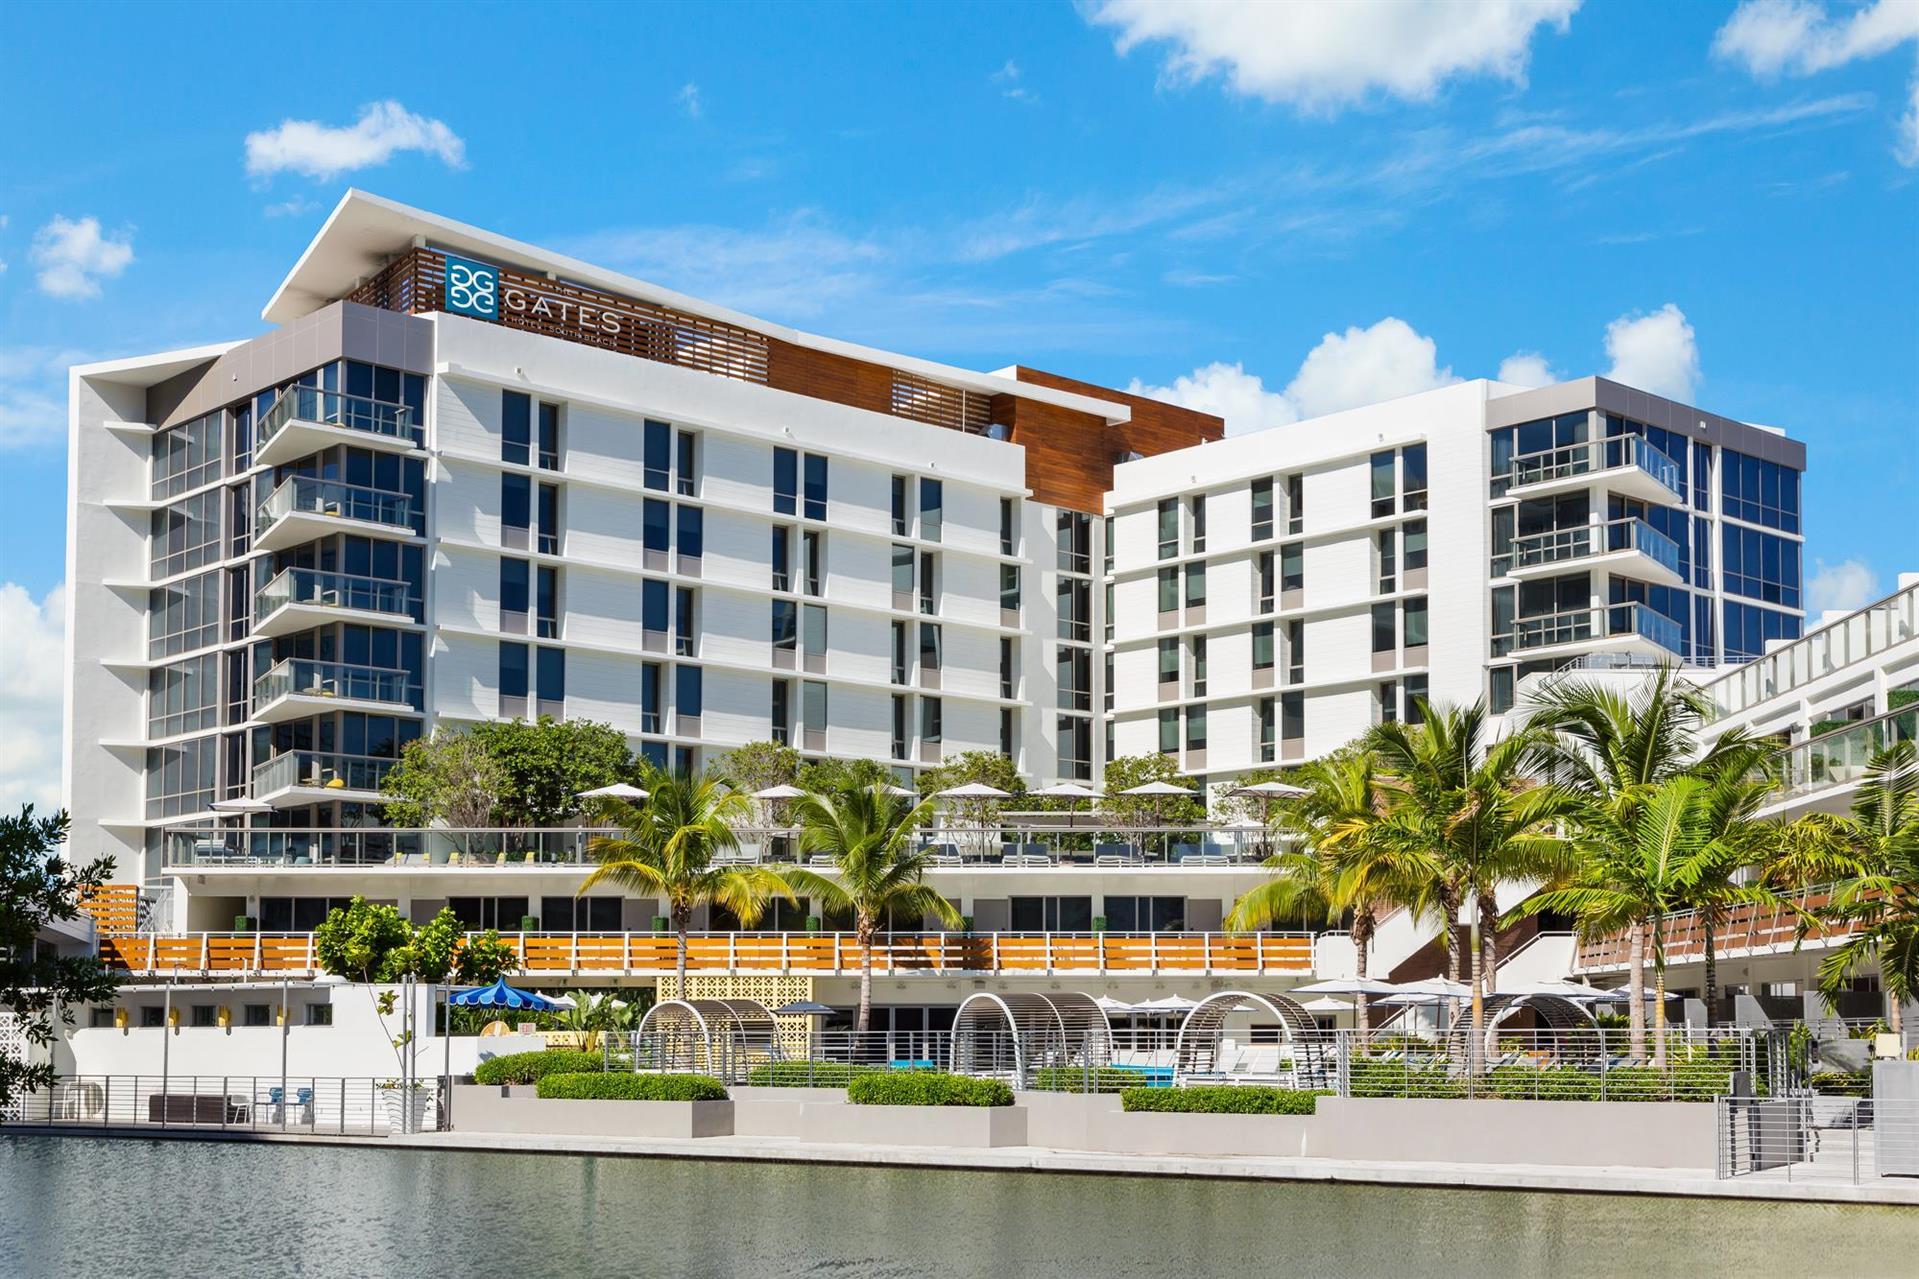 The Gates Hotel South Beach - a DoubleTree by Hilton in Miami Beach, FL